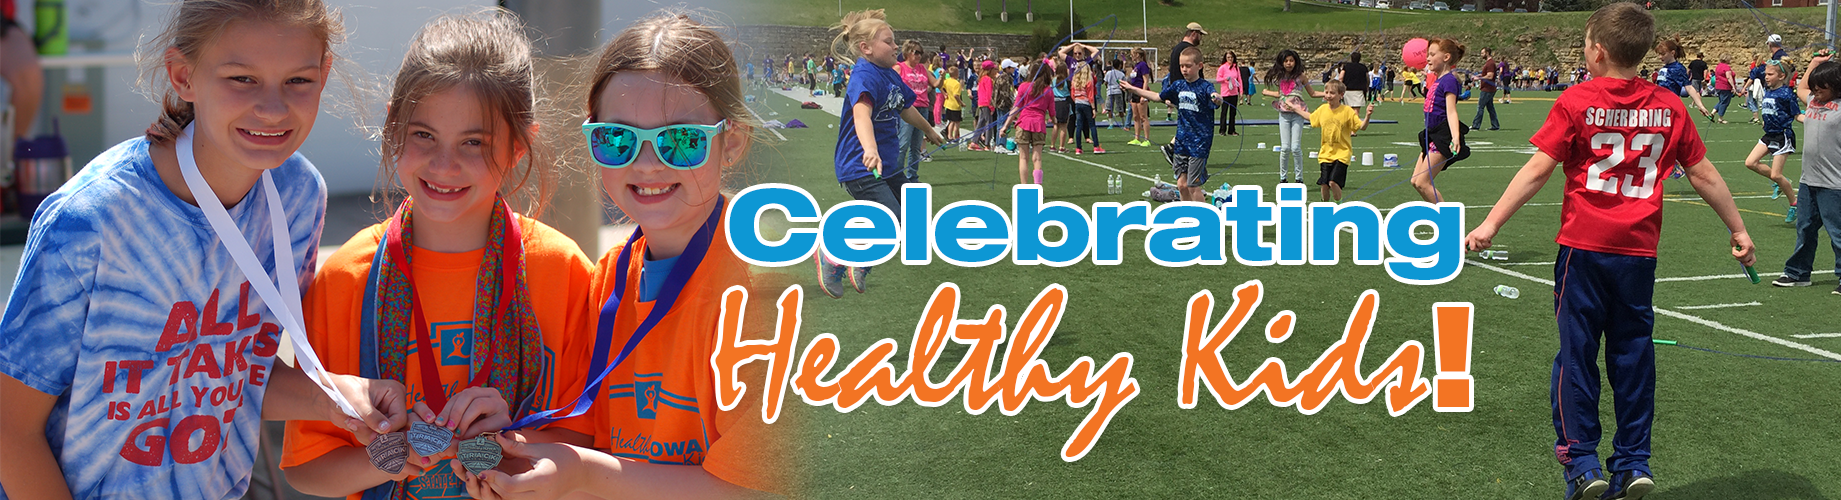 Celebrating Healthy Kids